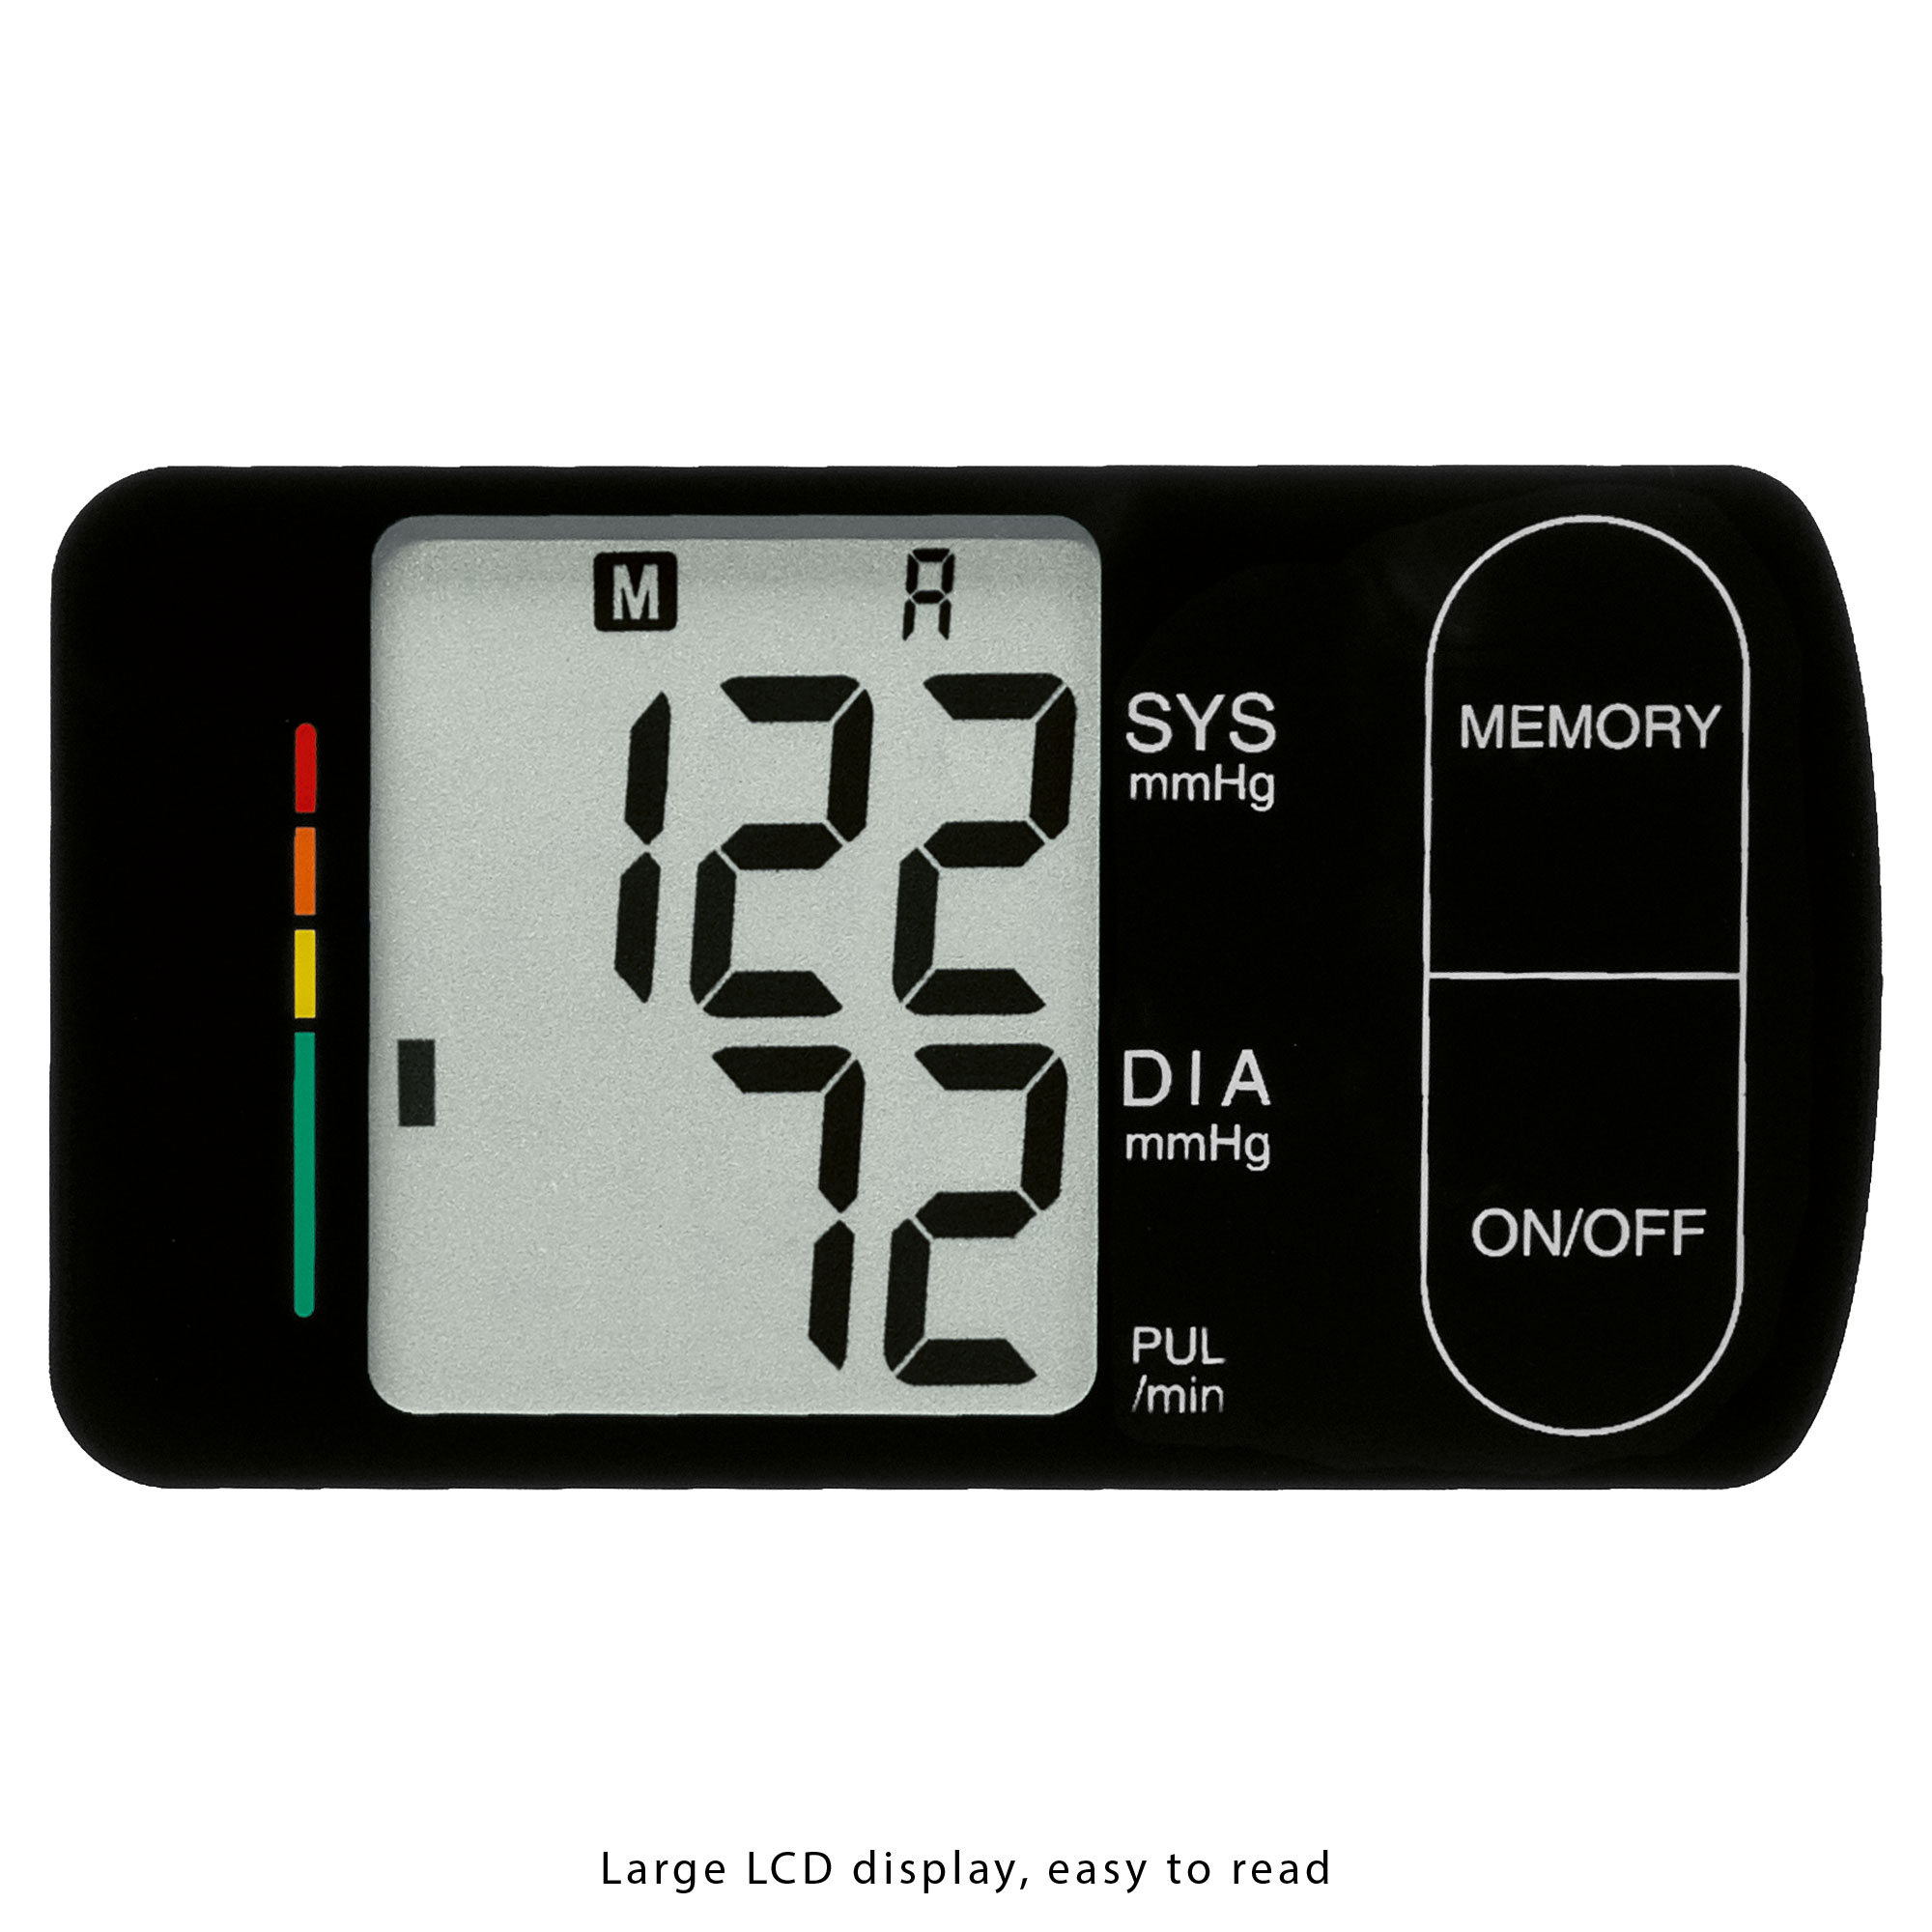 PROFI CARE Blutdruckmessgerät Handgelenk 3018 PC-BMG